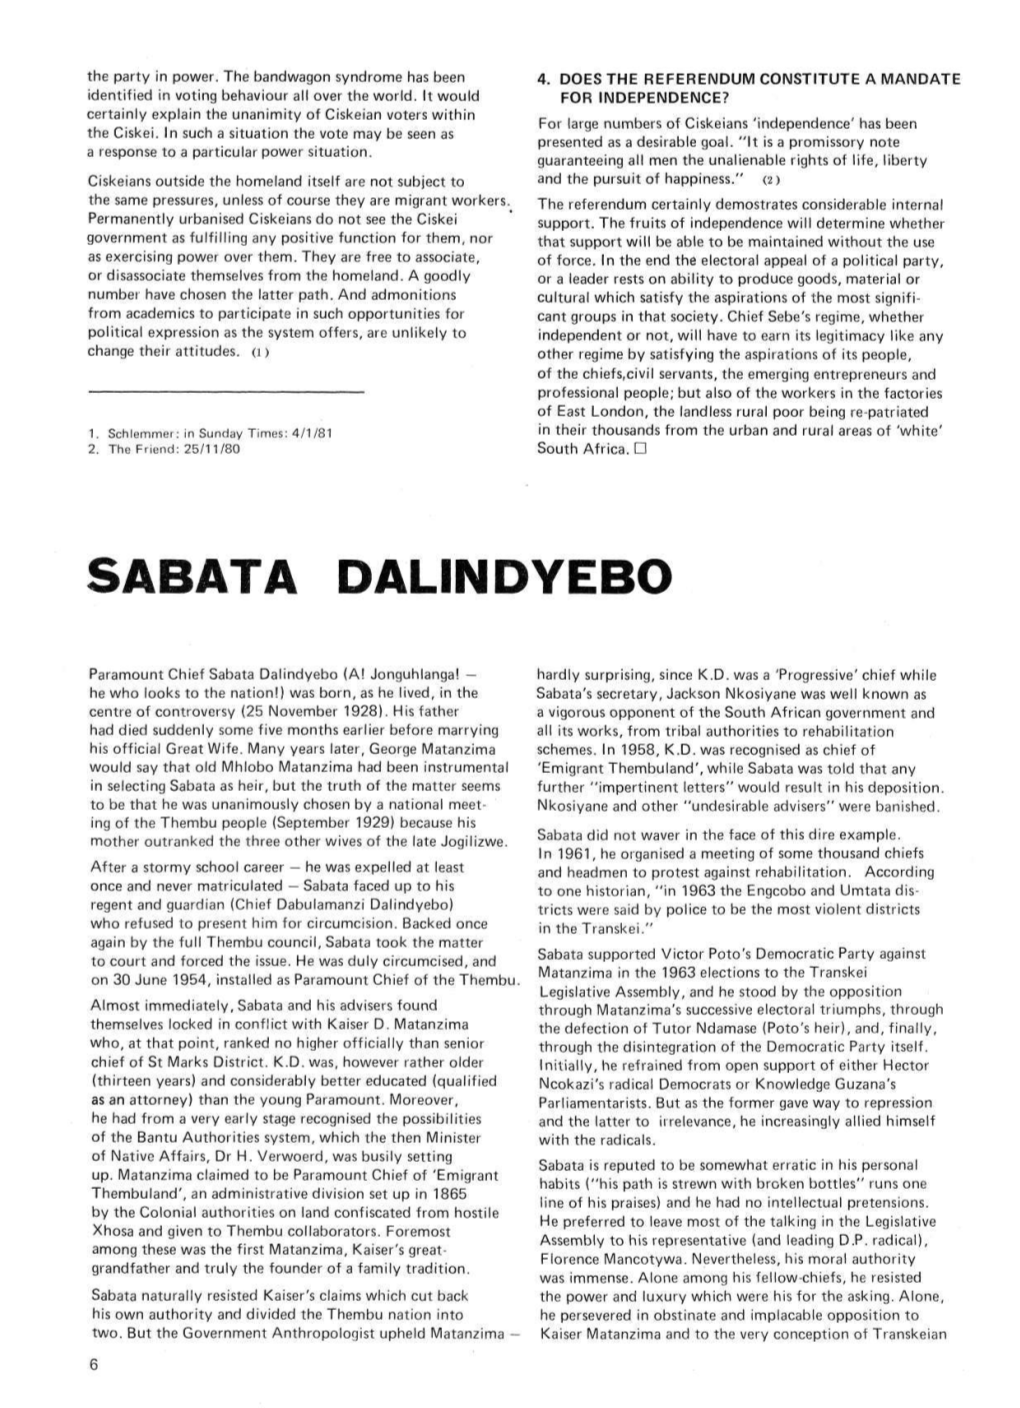 Sabata Dalindyebo